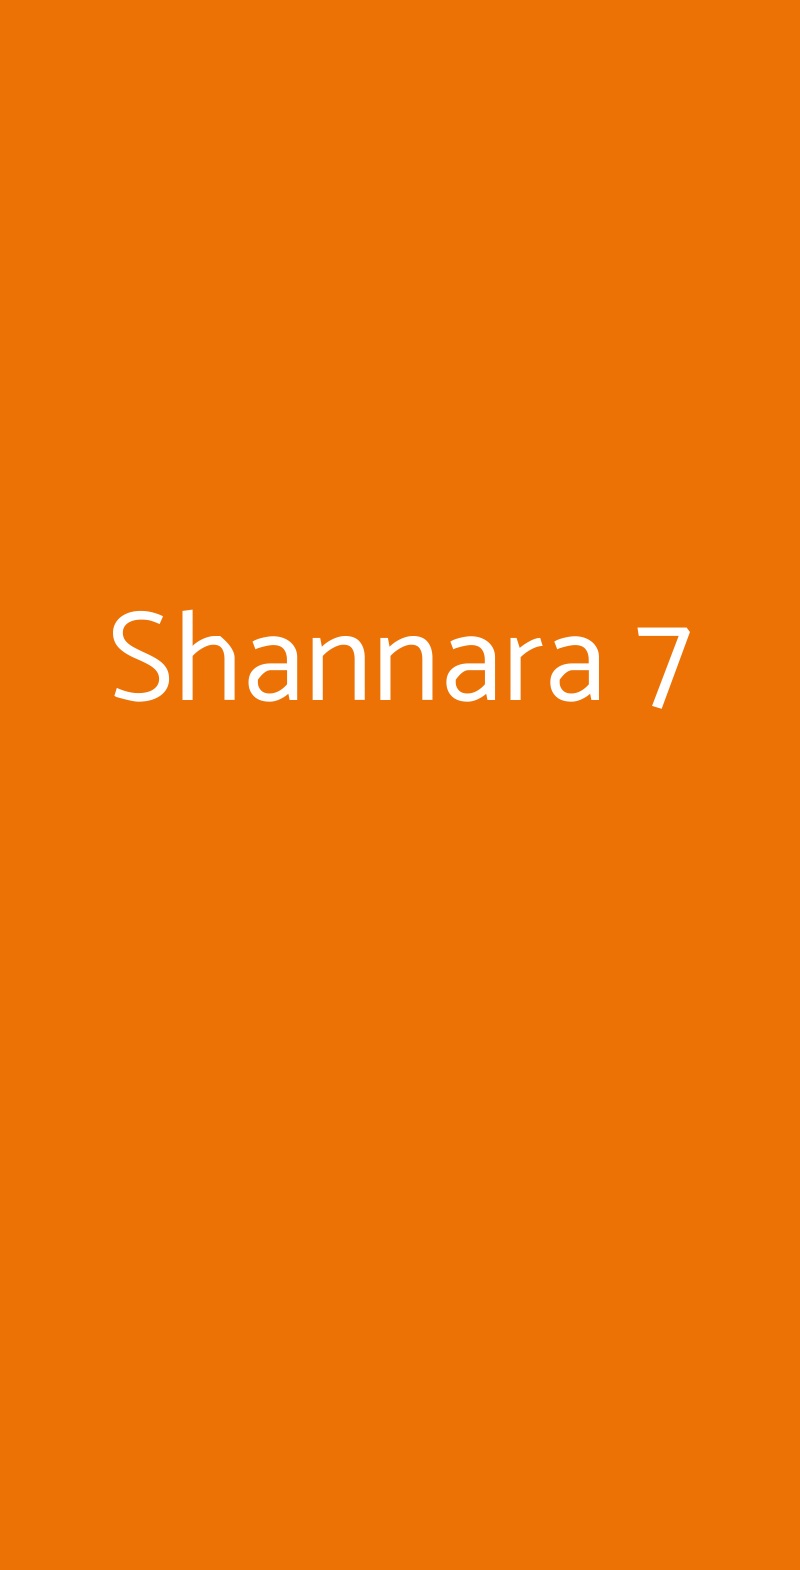 Shannara 7 Milano menù 1 pagina